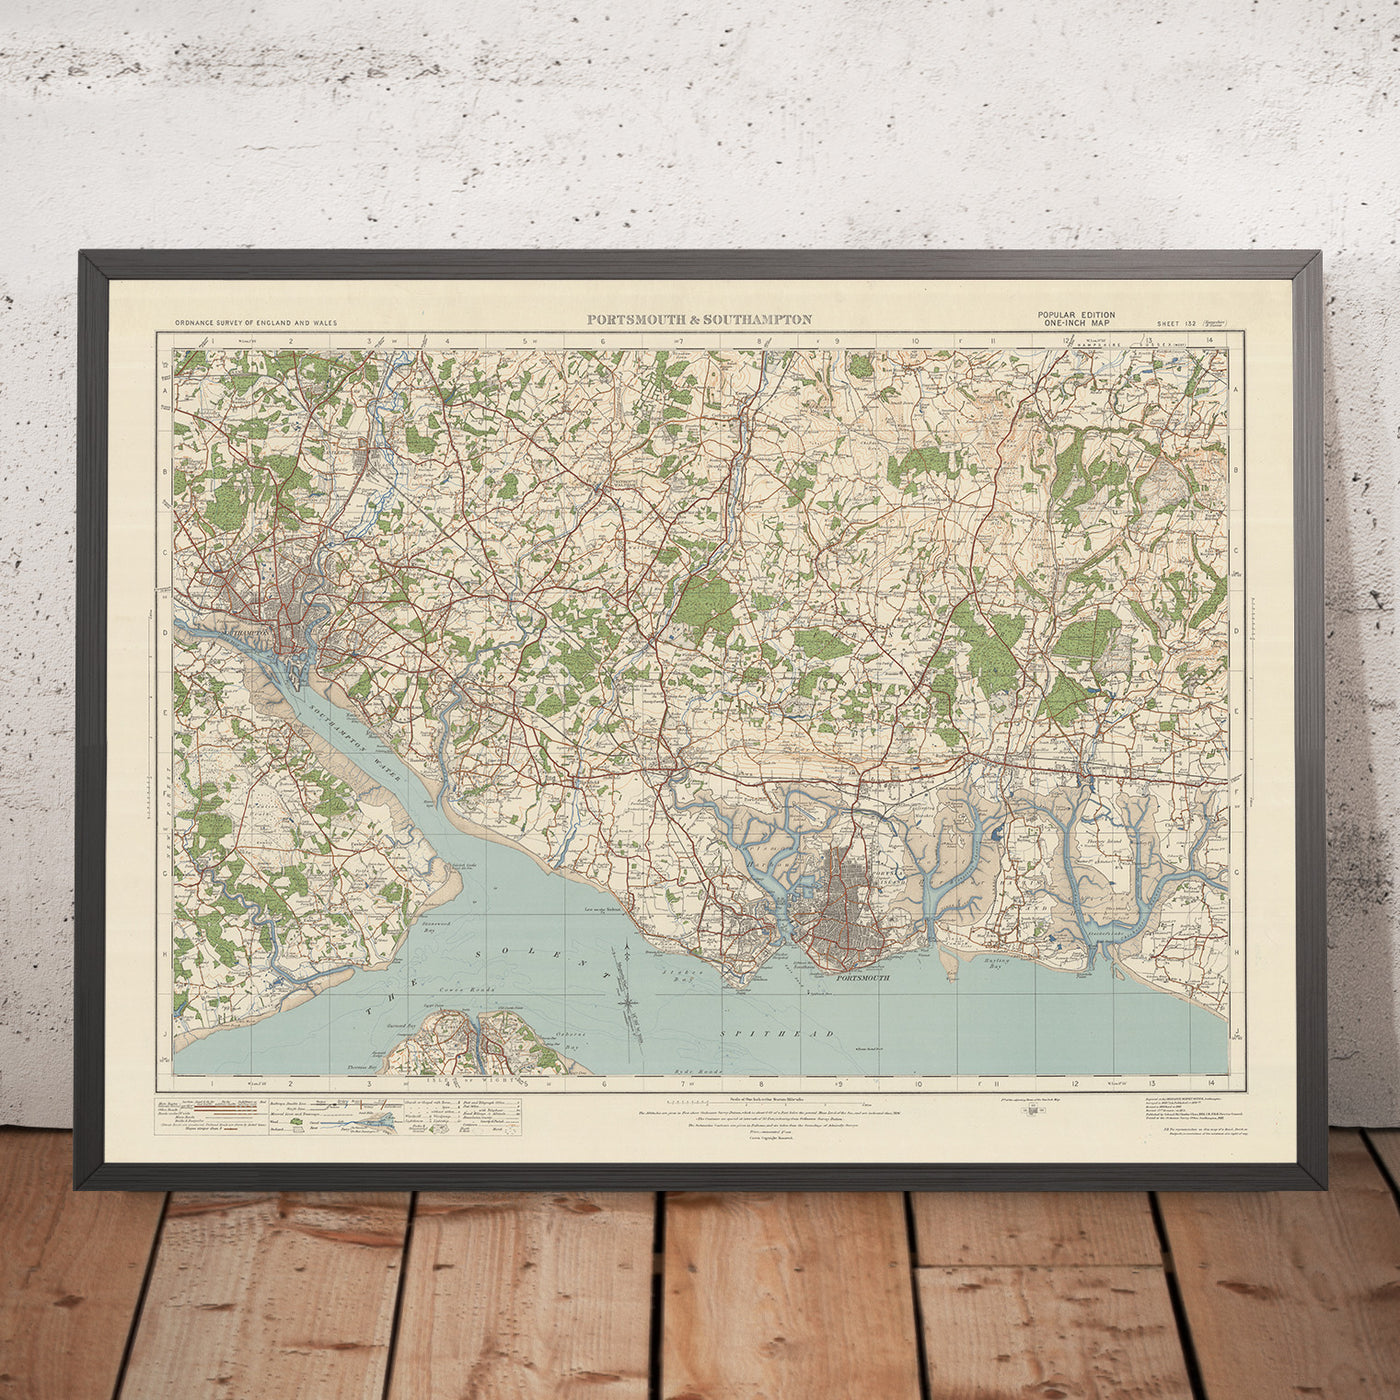 Old Ordnance Survey Map, Sheet 132 - Portsmouth & Southampton, 1925: Eastleigh, Fareham, Havant, Hayling Island, Chichester Harbour AONB